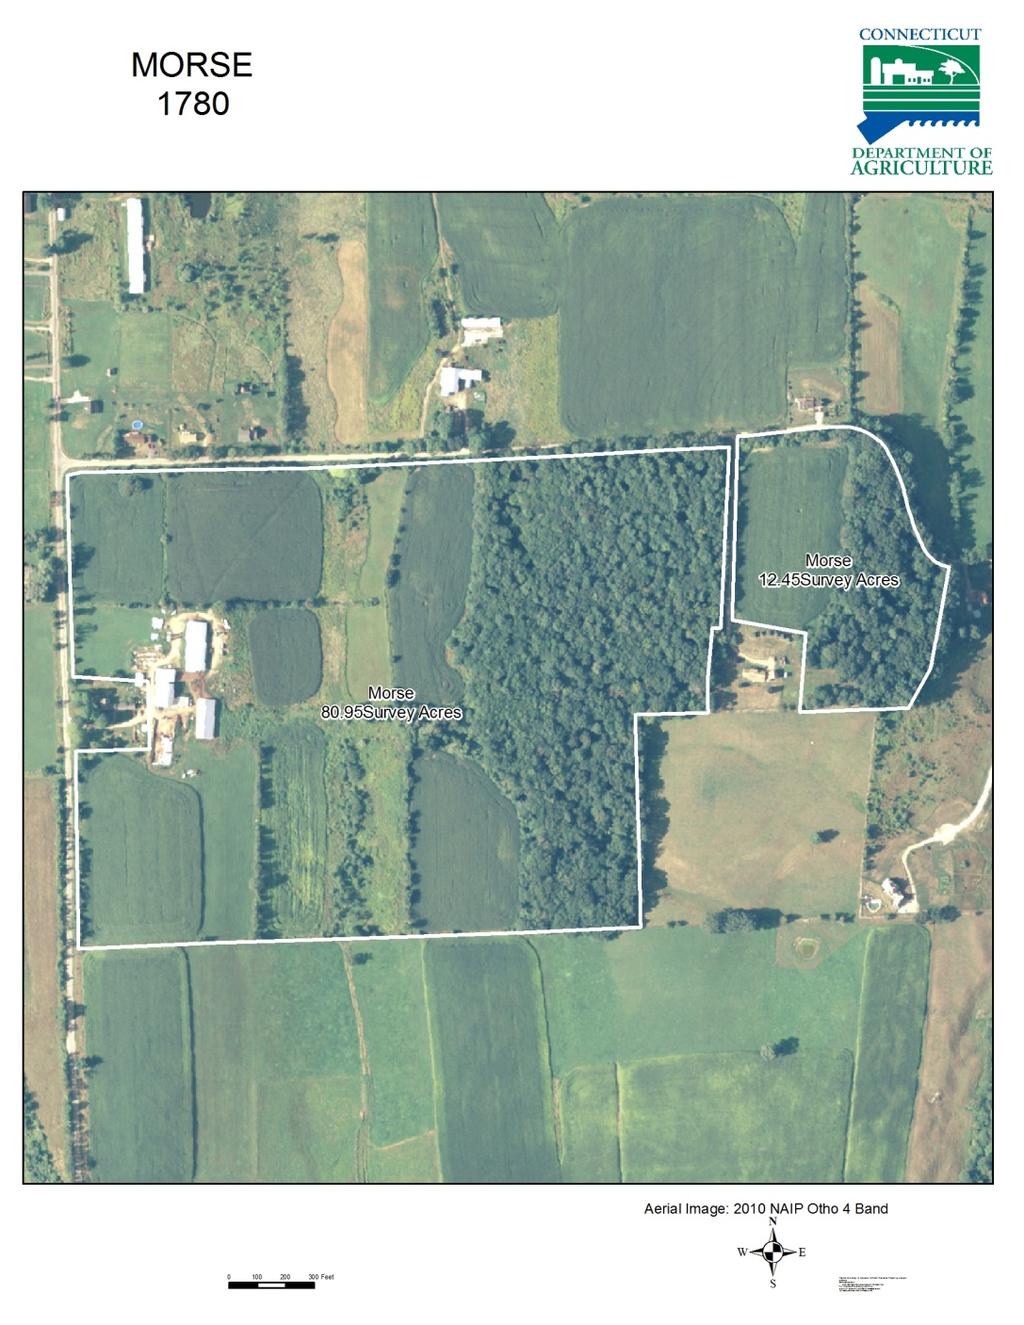 Morse Farm II PDR TOTAL FARM 94.90 acres 93.40 acres Two parcels 80.95 acres western portion 12.45 acres eastern portion Excl land (western) 1.